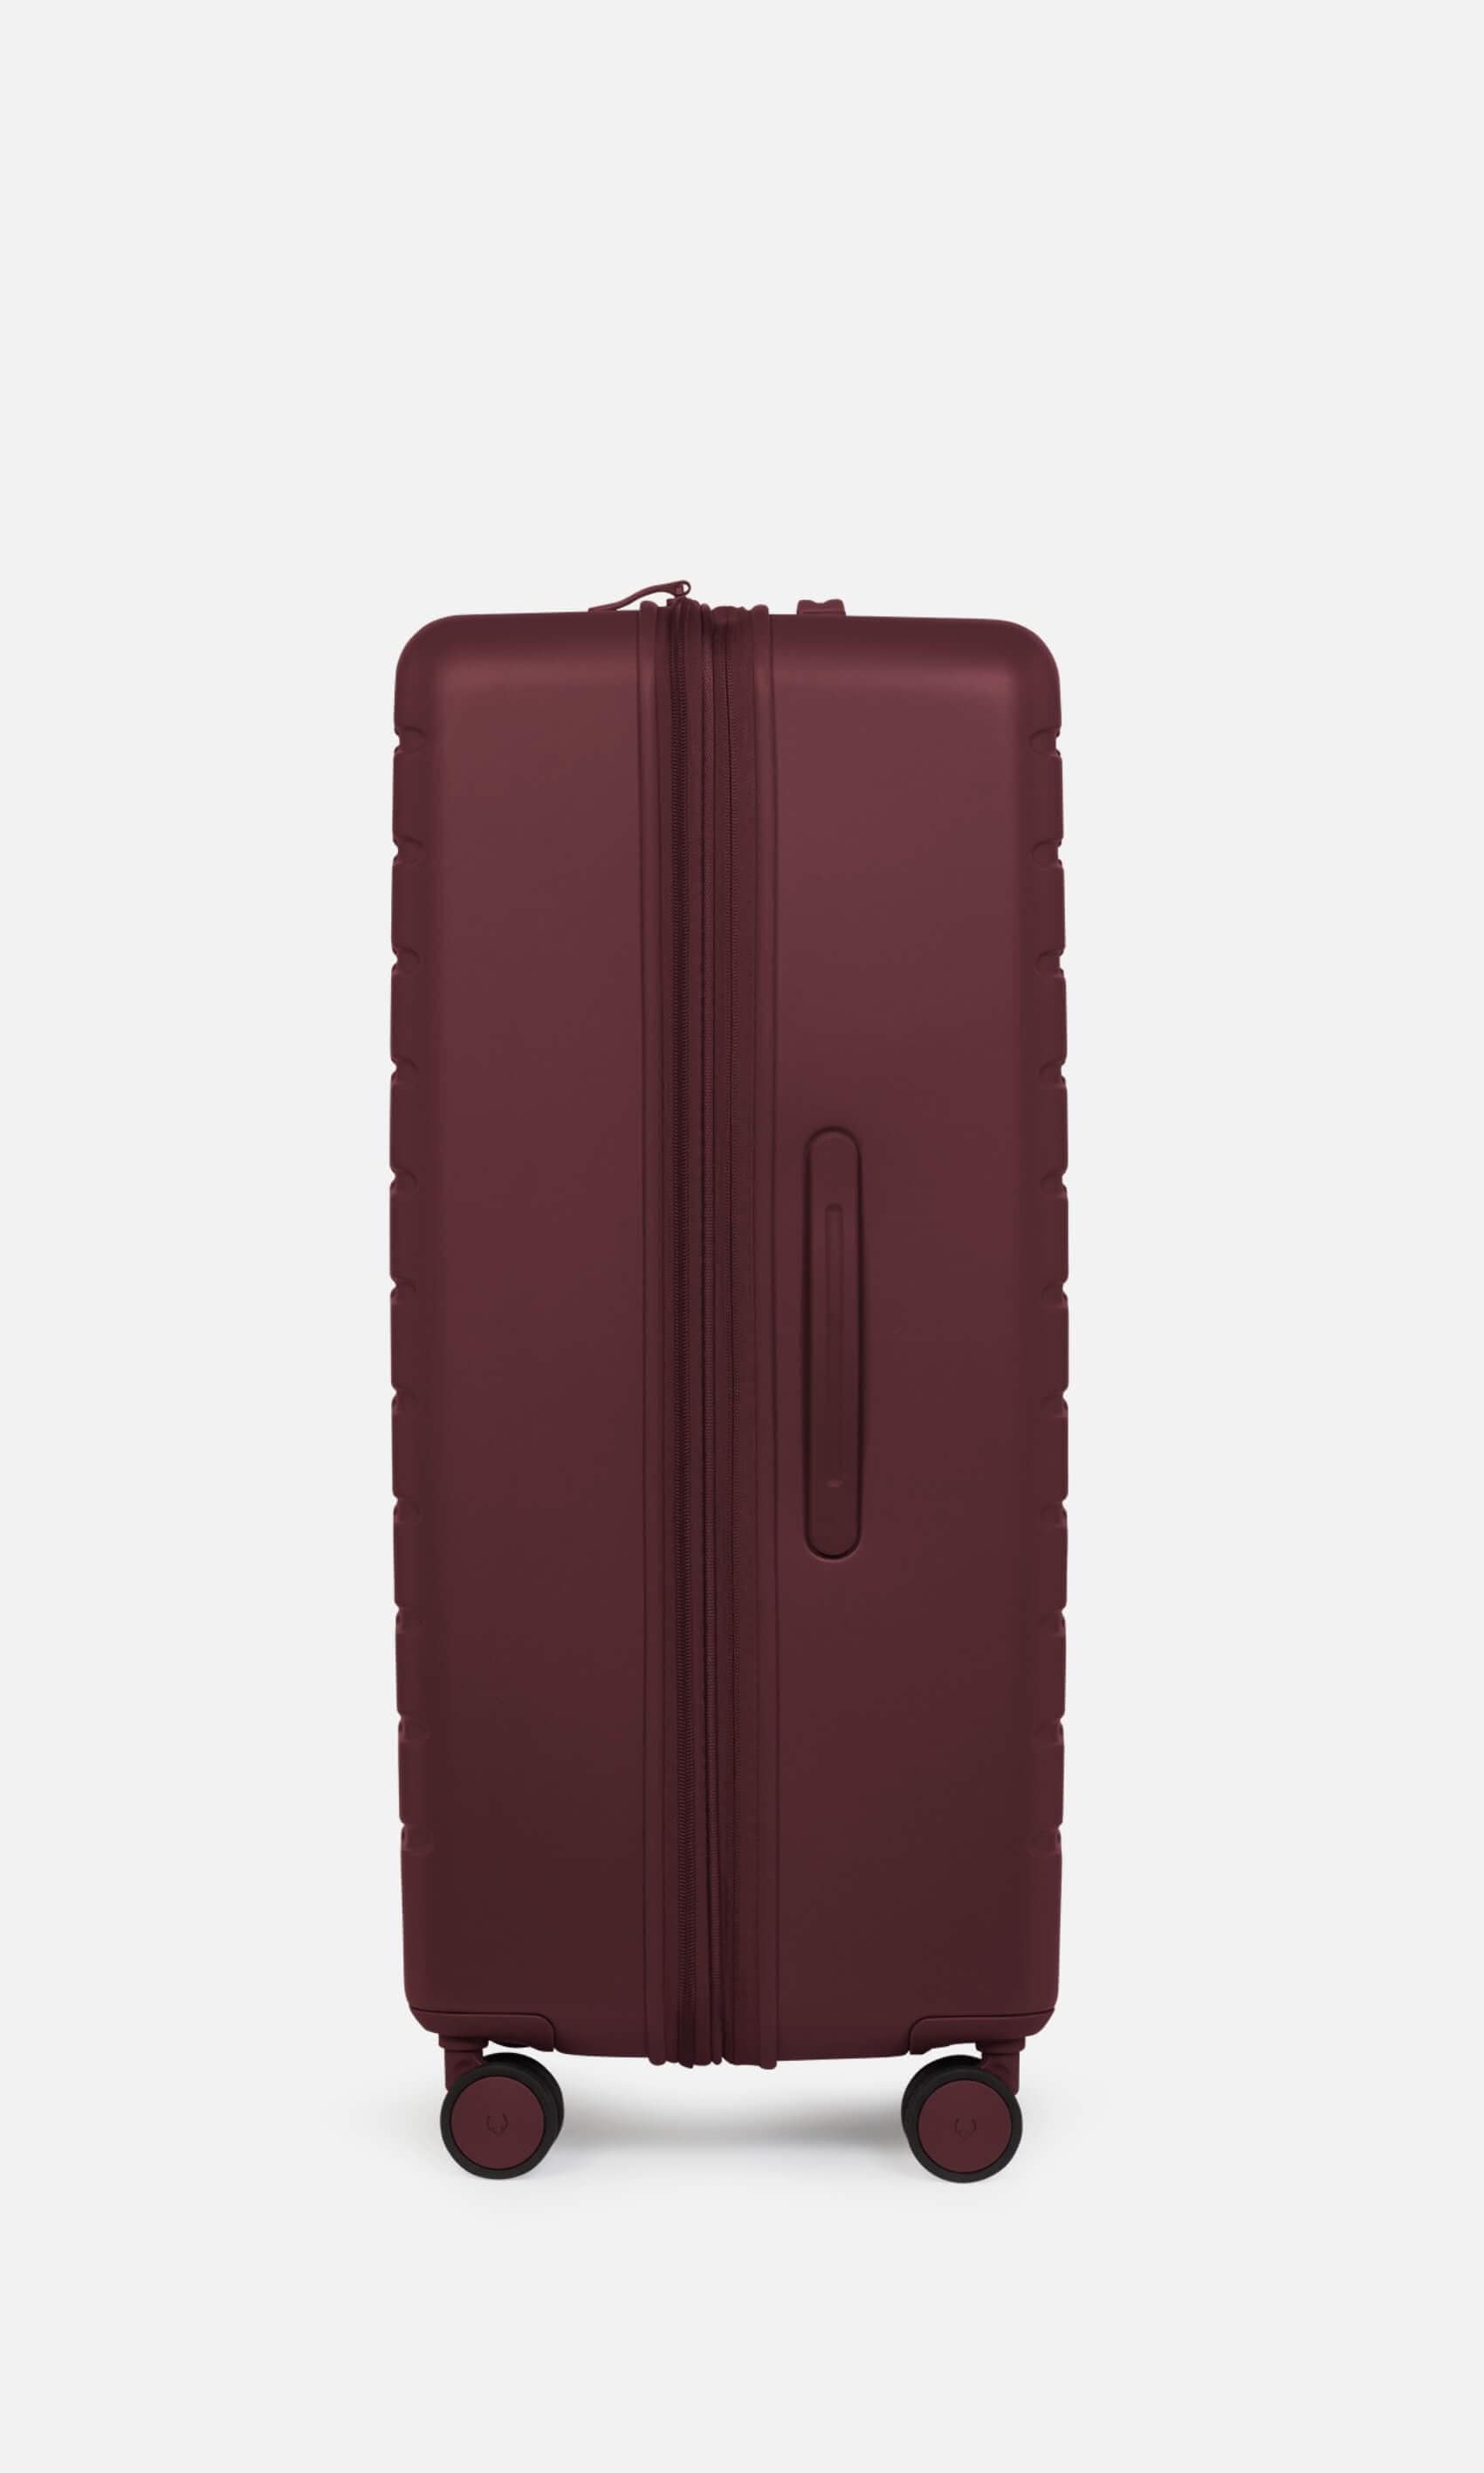 Antler Luggage -  Stamford large in berry purple - Hard Suitcases Stamford Large Suitcase Purple | Hard Luggage | Antler 